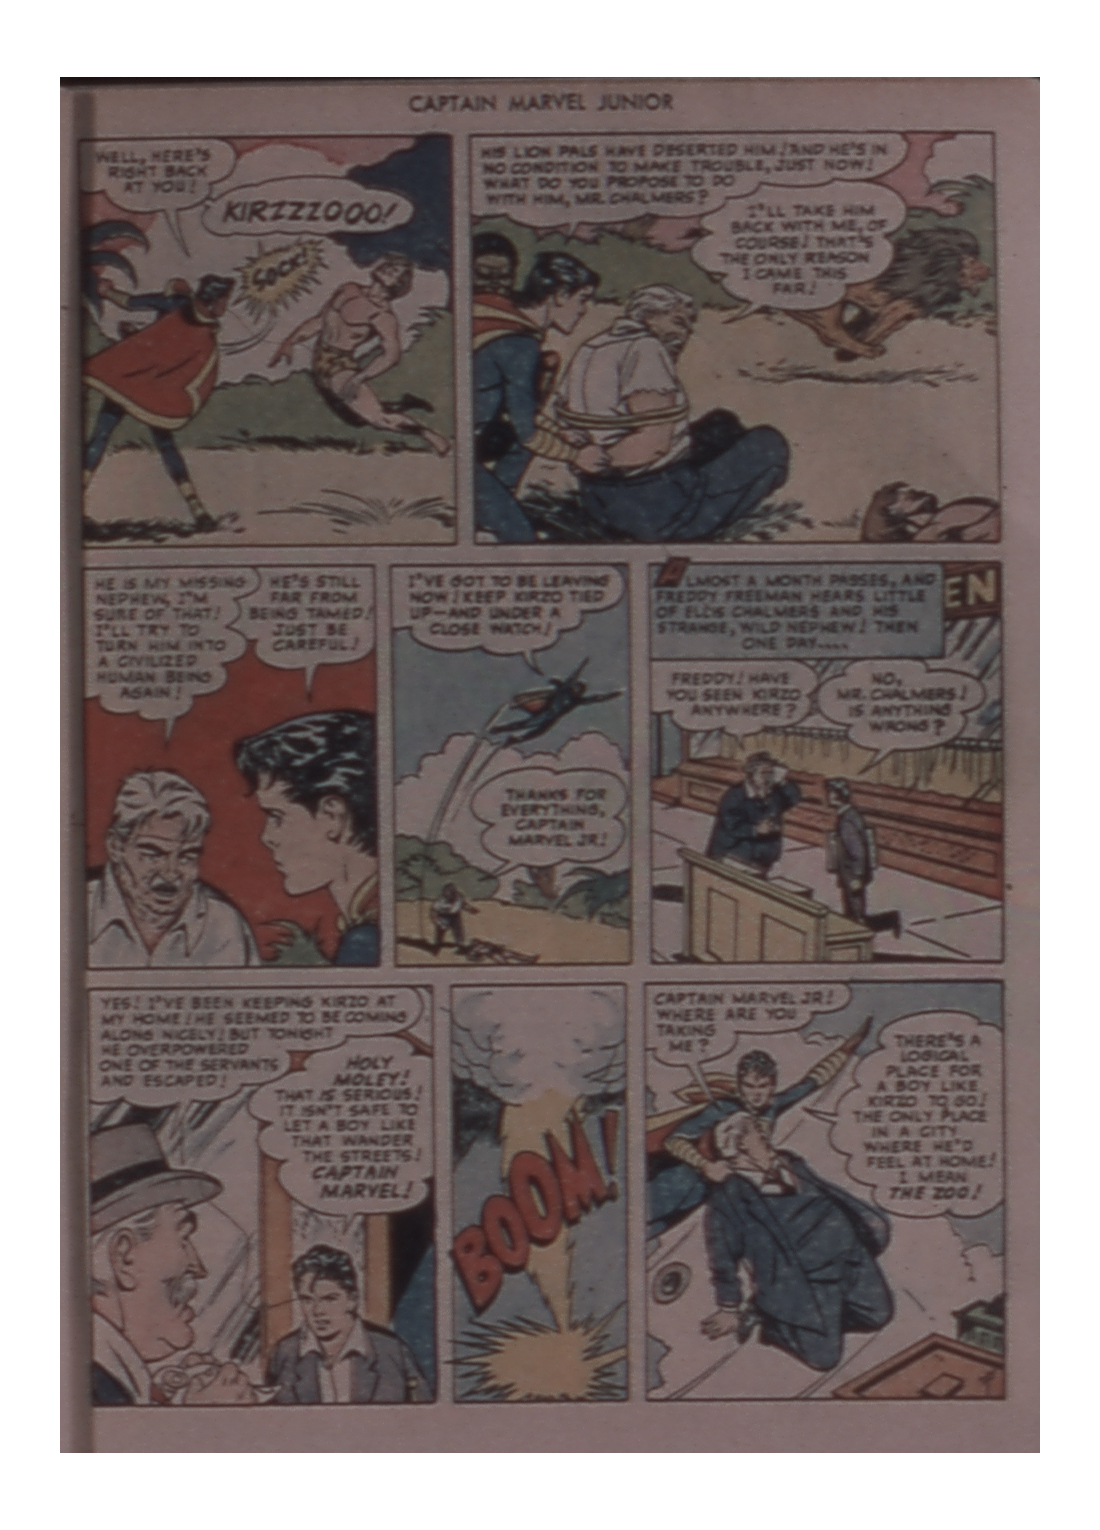 Read online Captain Marvel, Jr. comic -  Issue #81 - 31